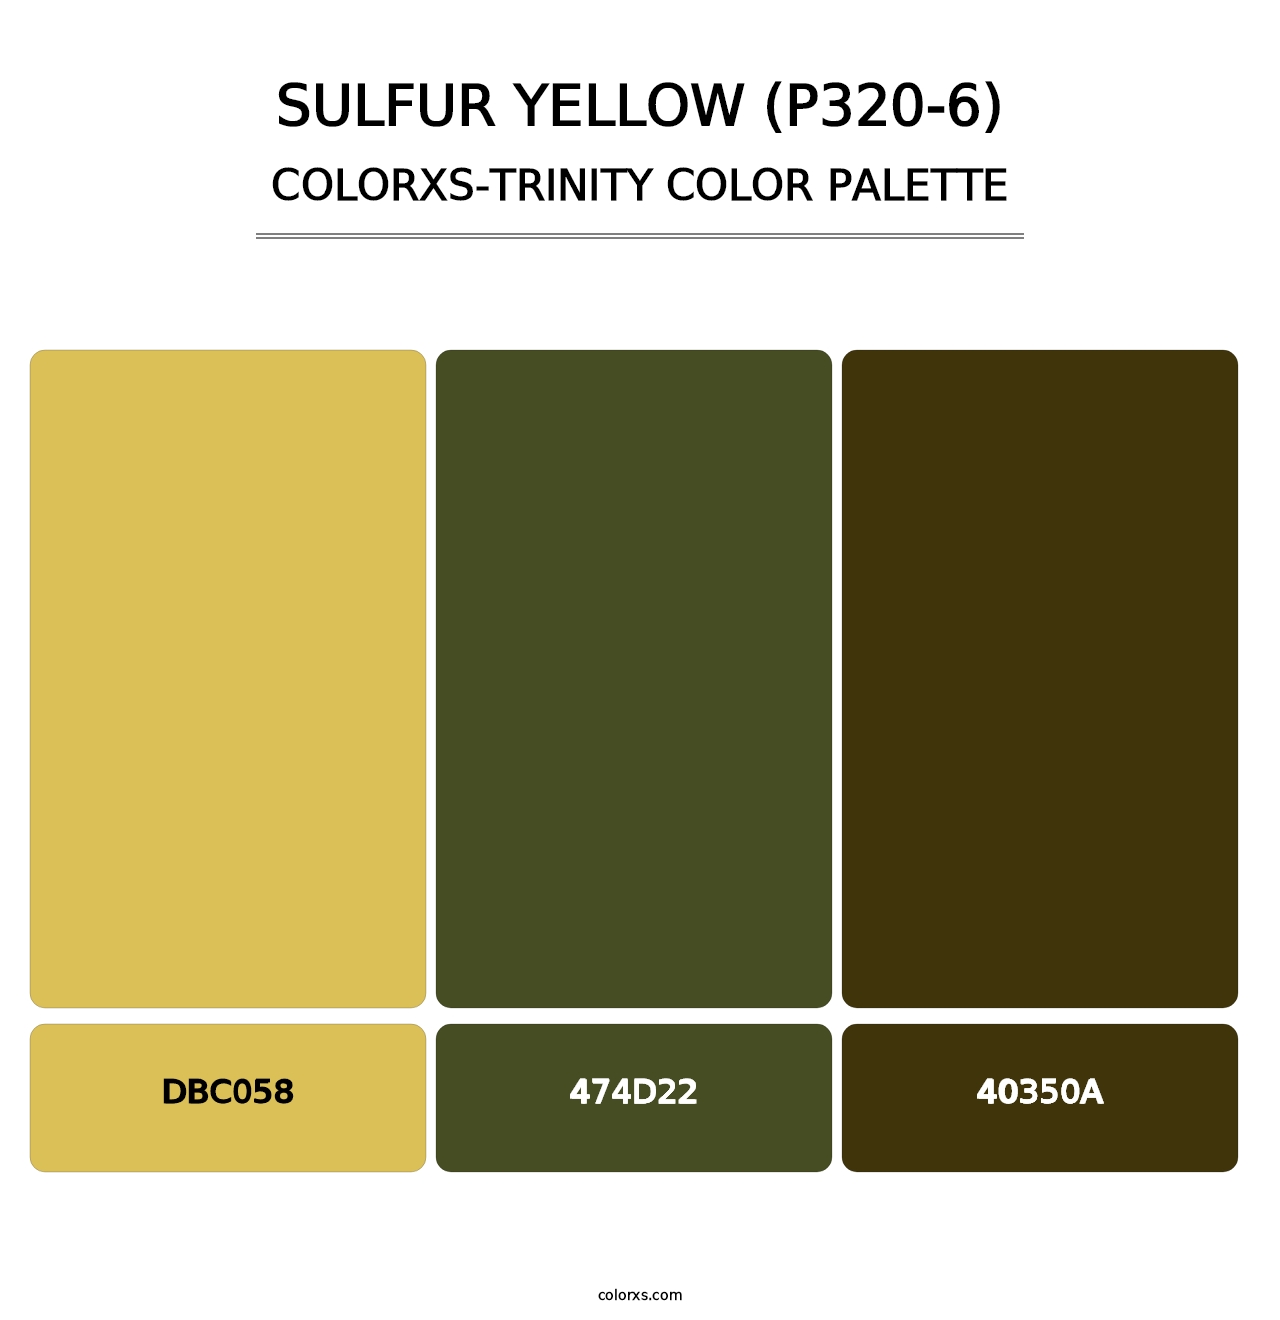 Sulfur Yellow (P320-6) - Colorxs Trinity Palette